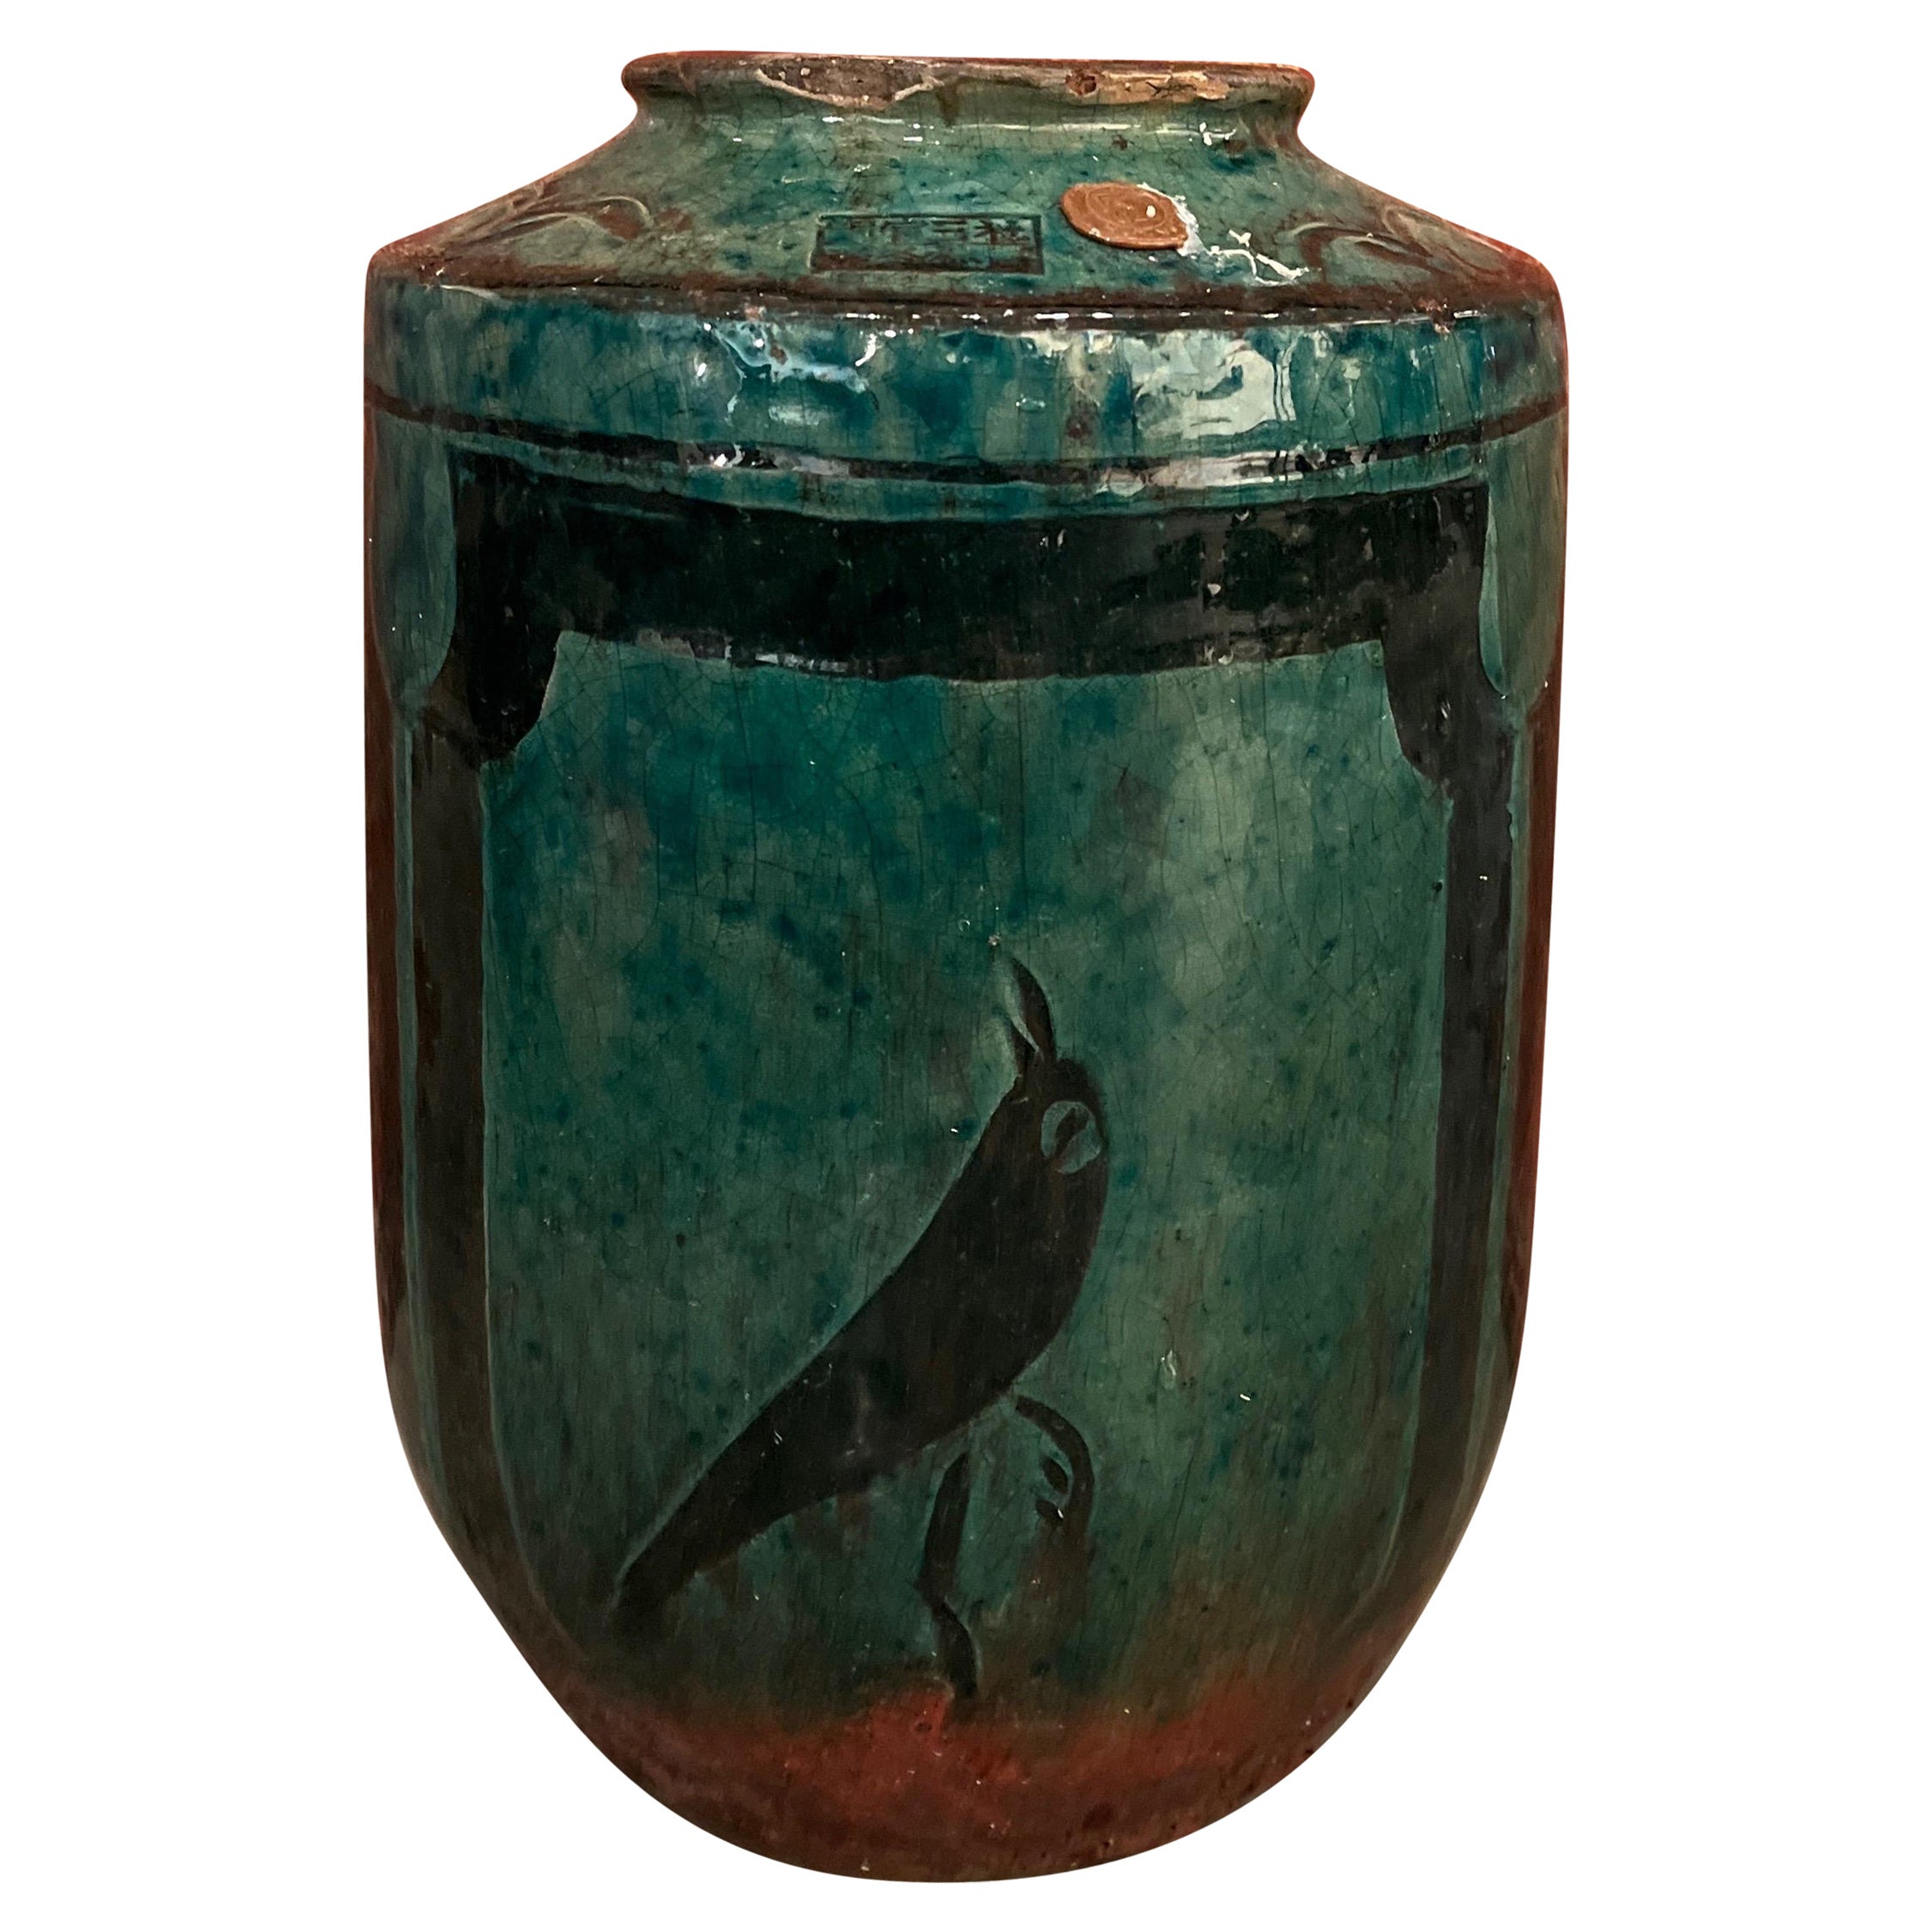 19th Century Ceramic Jar/Vase  With Green Glaze And  Hand Painted Bird Image